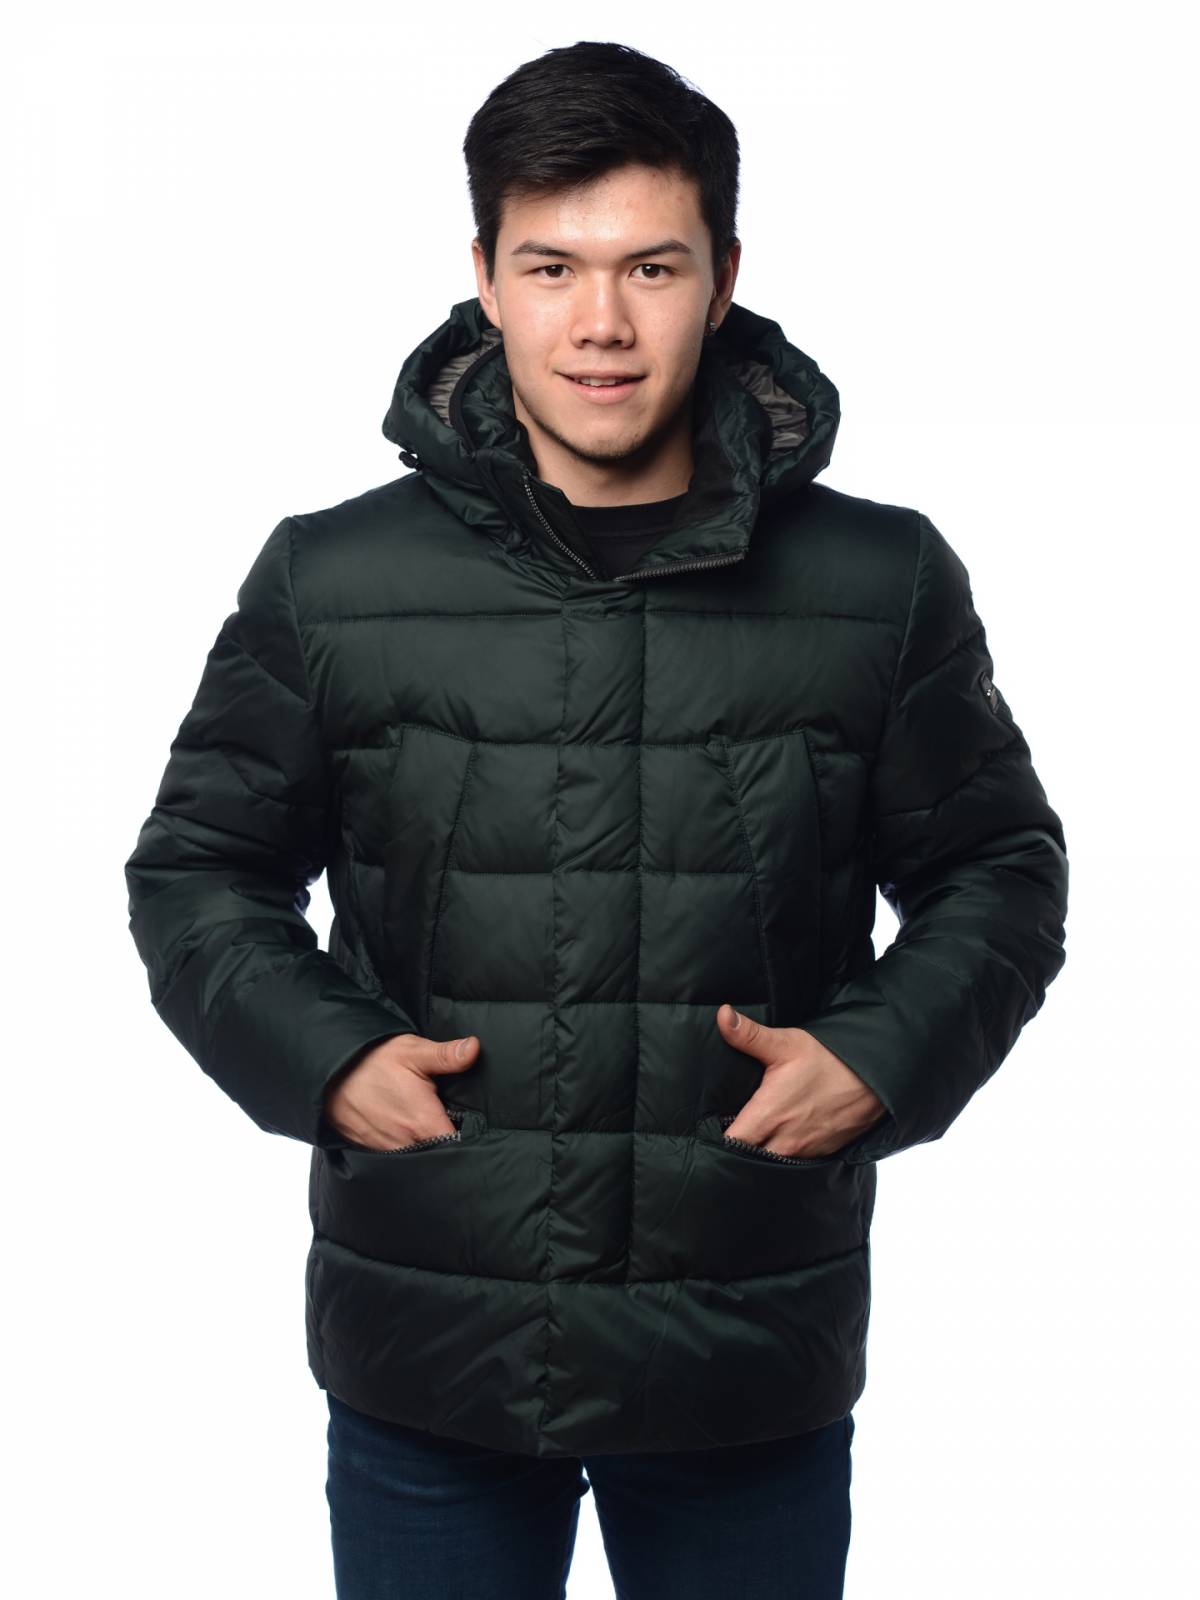 Зимняя куртка мужская Clasna 3350 зеленая 46 RU